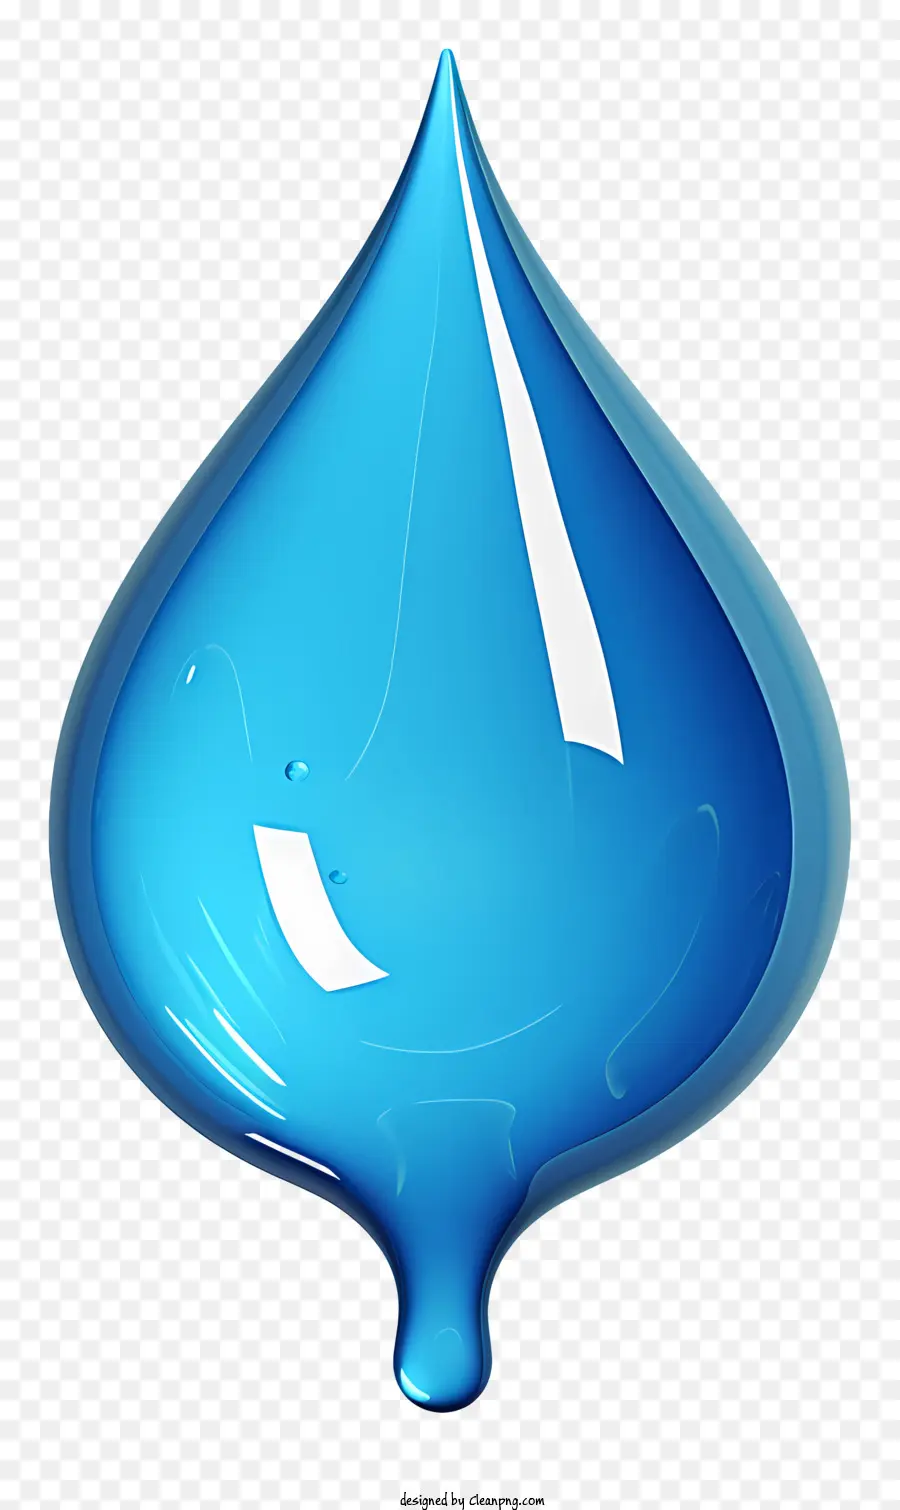 goccia d'acqua realistica goccia blu forma a bolle a bolle traslucida goccia liquida - Caduta blu con forma a bolle sospesa in aria